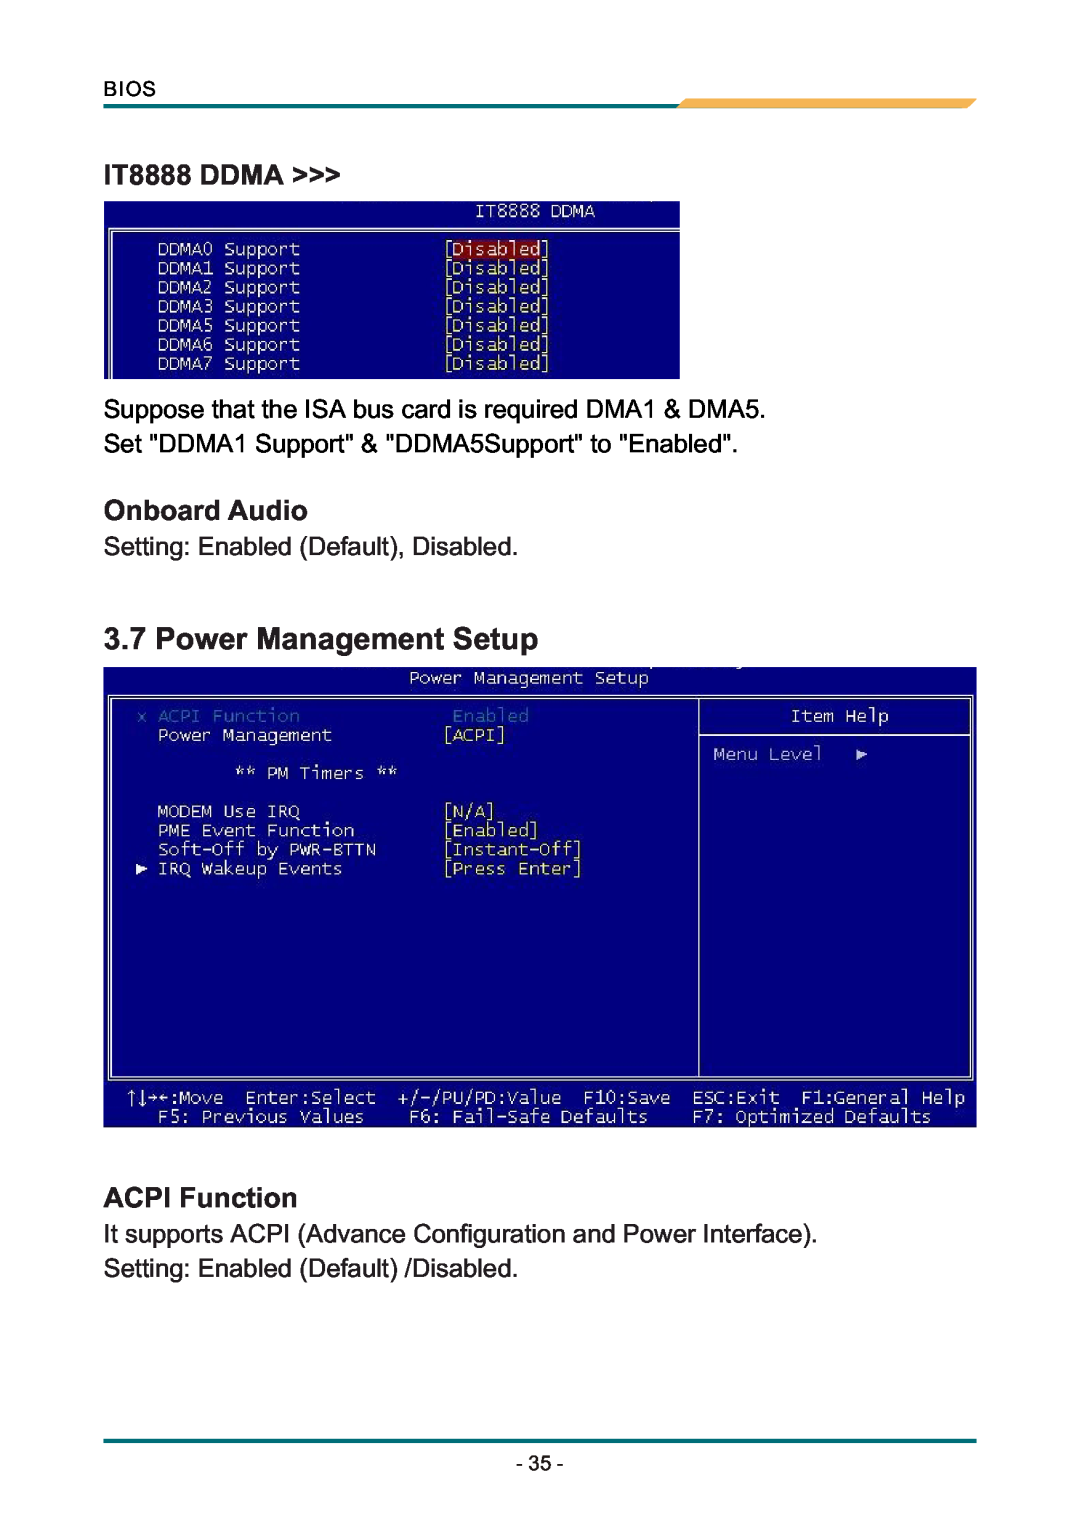 AMD SBX-5363 manual Power Management Setup, IT8888 DDMA, Onboard Audio, ACPI Function, Bios 